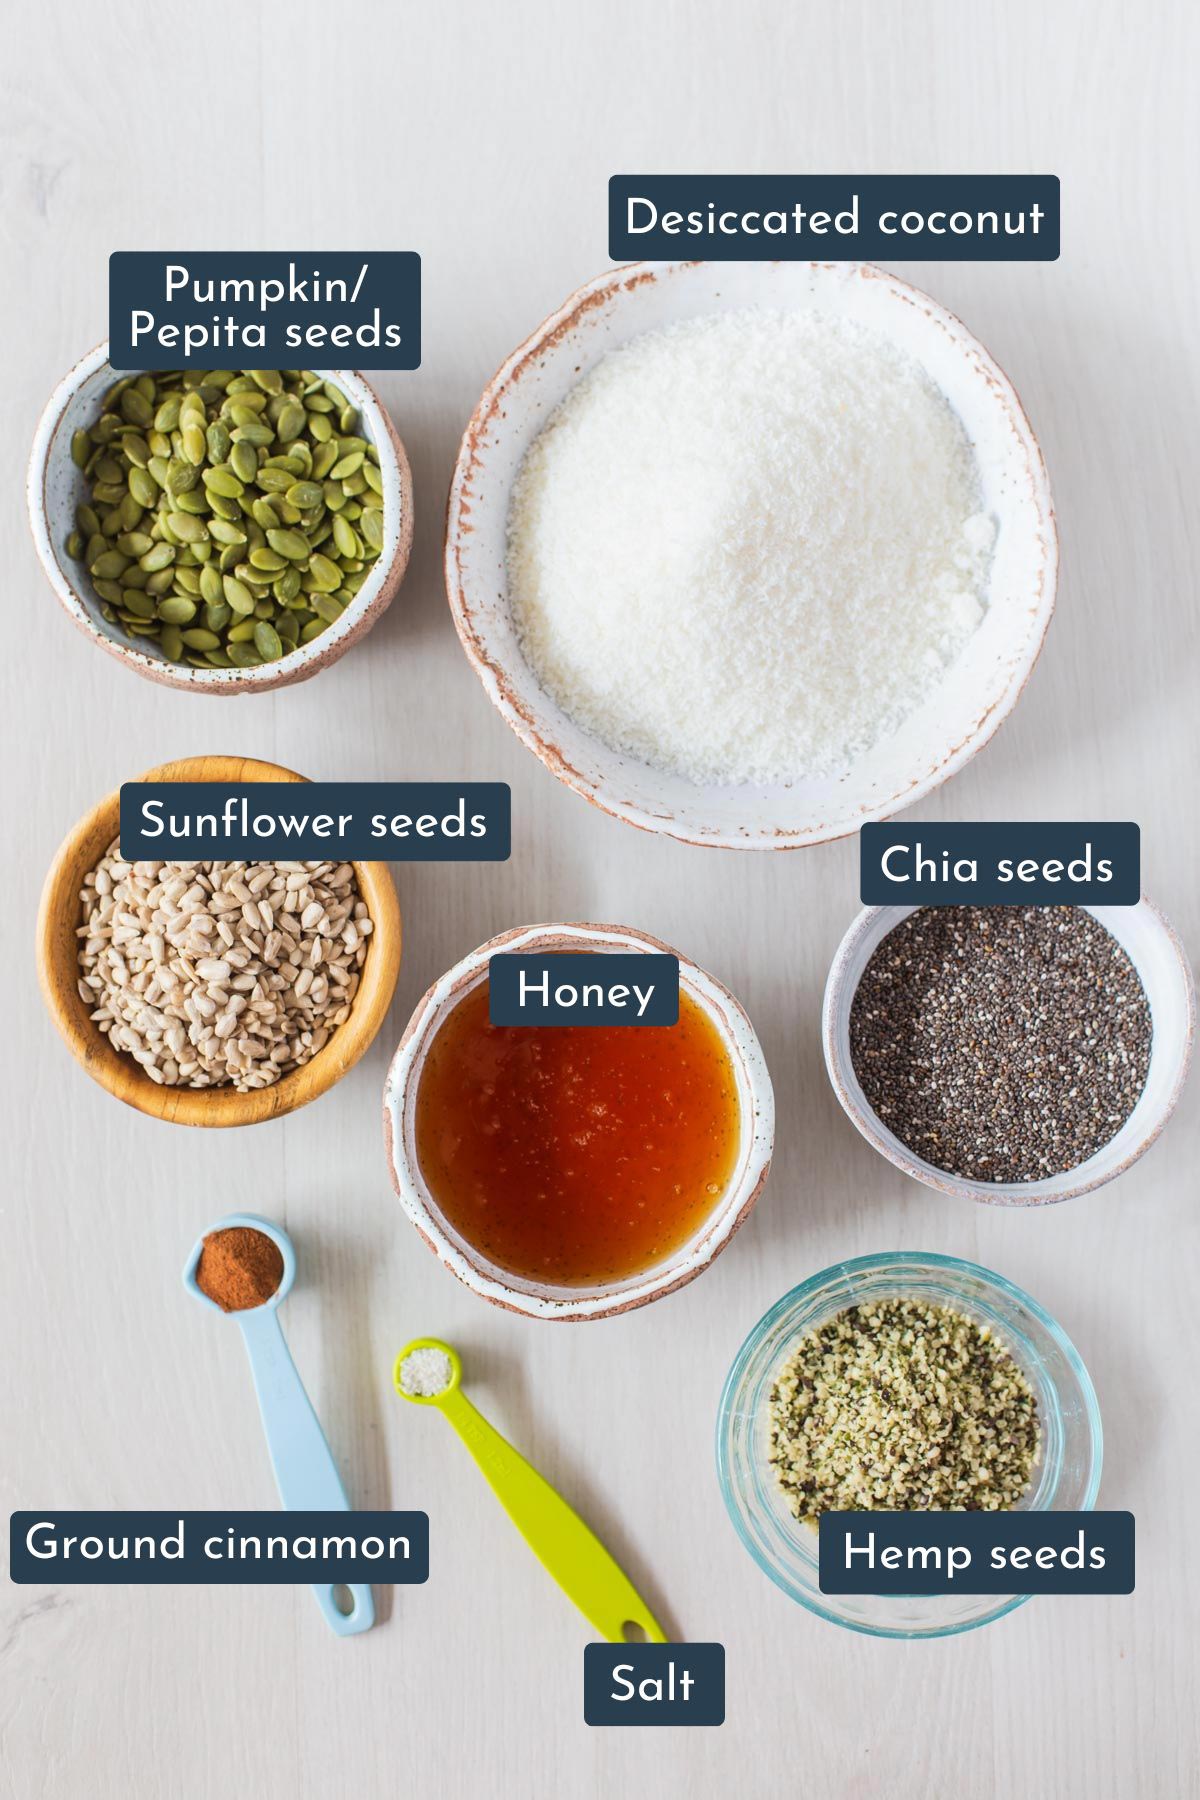 Ingredients to make seed bars is hemp seeds, sunflower seeds, chia seeds, pumpkin seeds, desiccated coconut, honey, ground cinnamon and salt.